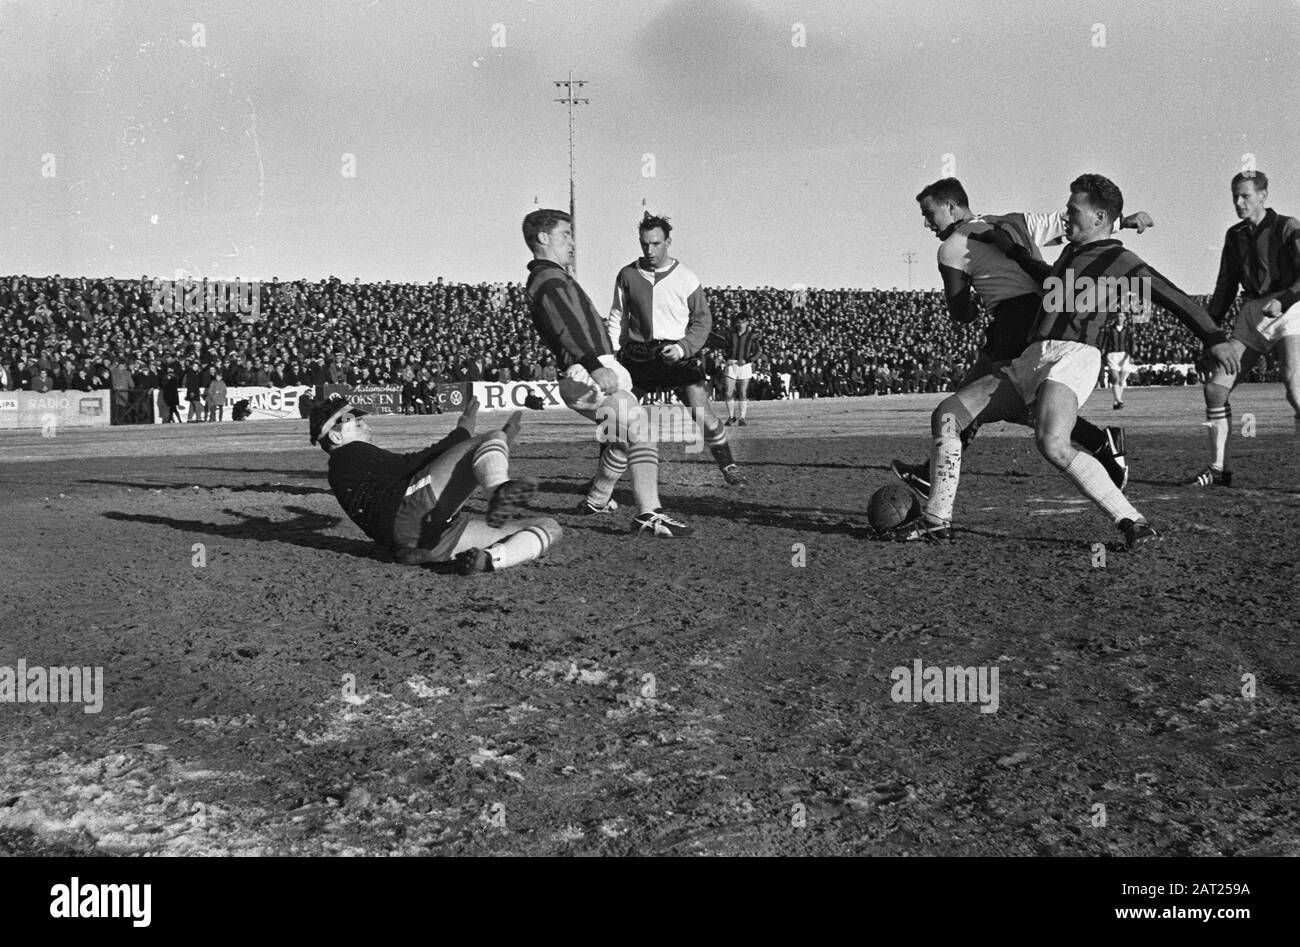 Feijenoord versus RCH, friendly at Heemstede. Van Schilden dives on shot of Bouwmeester Date: 27 January 1963 Location: Heemstede Keywords: sport, football Institution name: Feyenoord Stock Photo